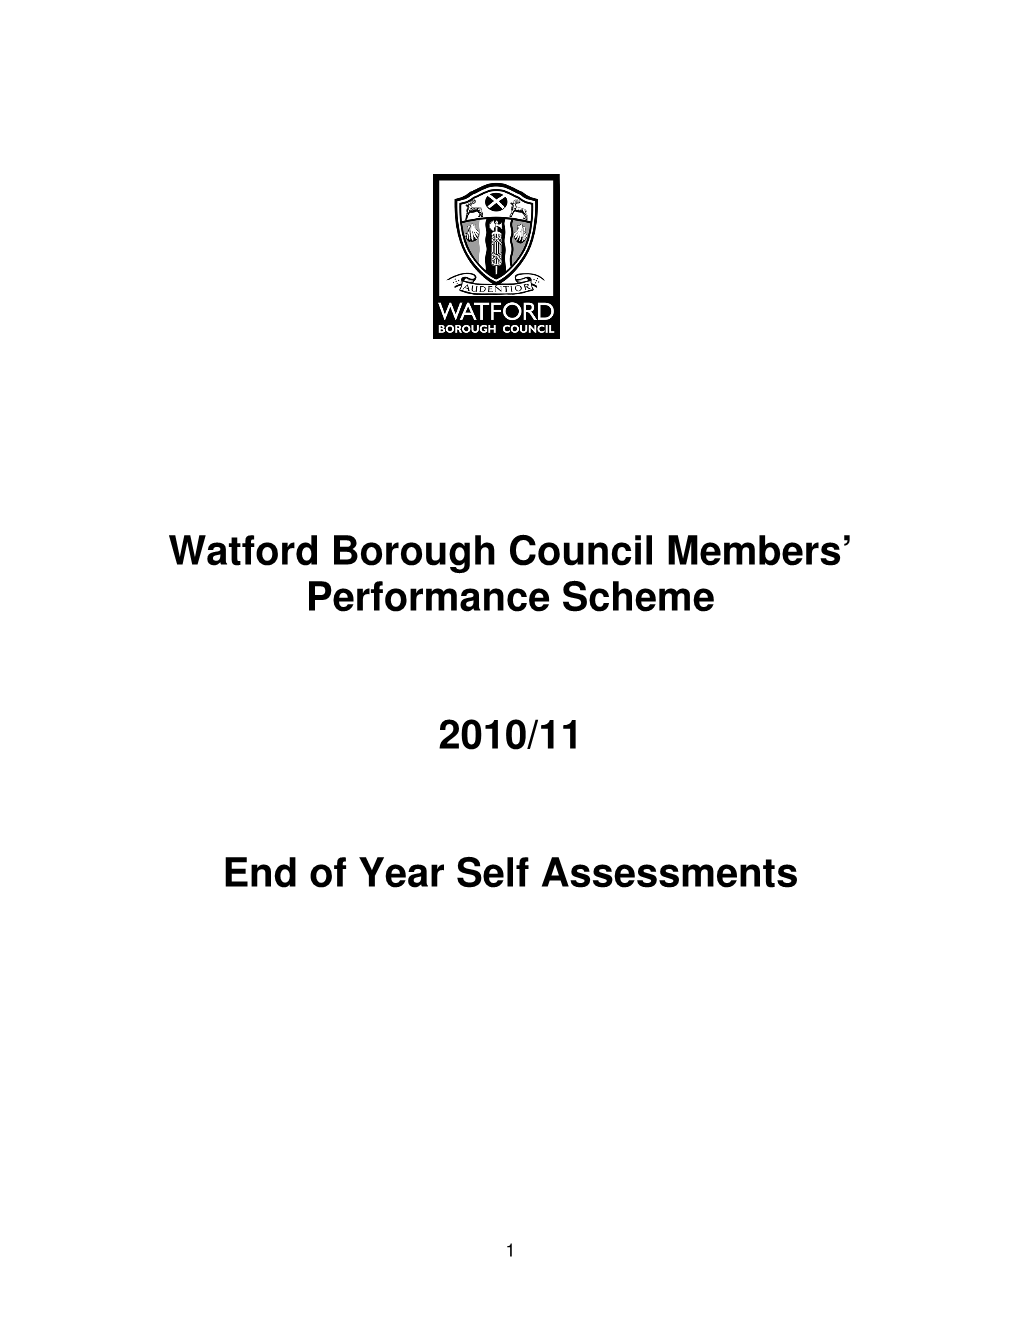 Watford Borough Council Members' Performance Scheme 2010/11 End